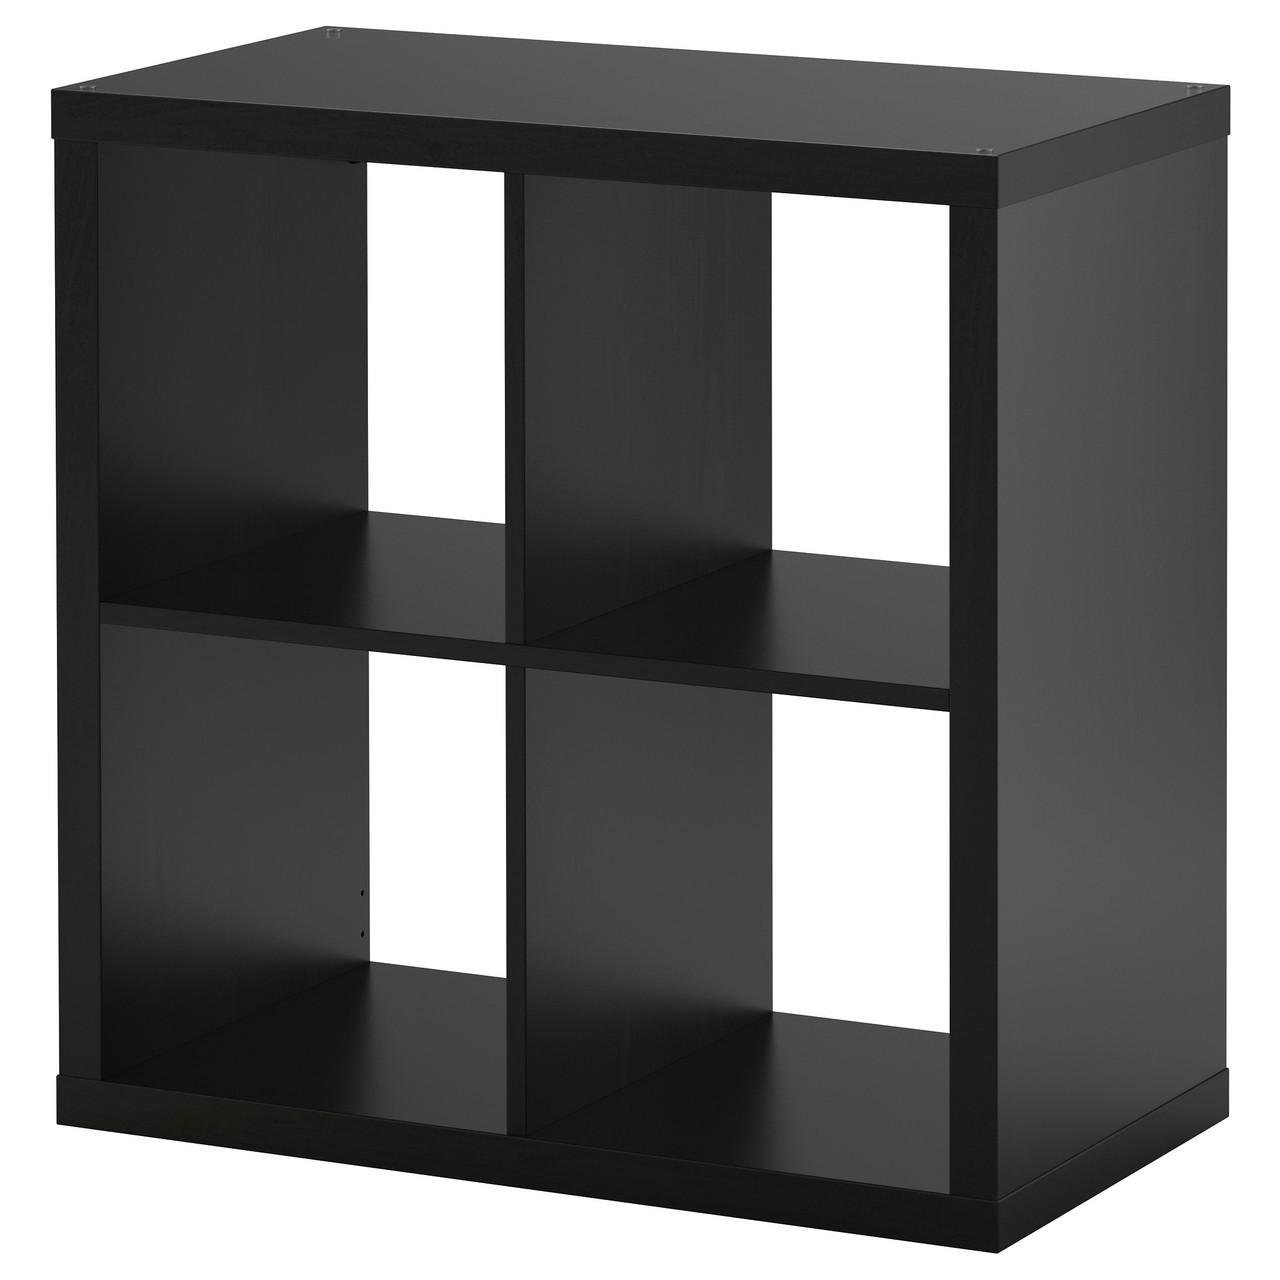 Стеллаж IKEA KALLAX 2х2 ящика Черно-коричневый (602.758.12)